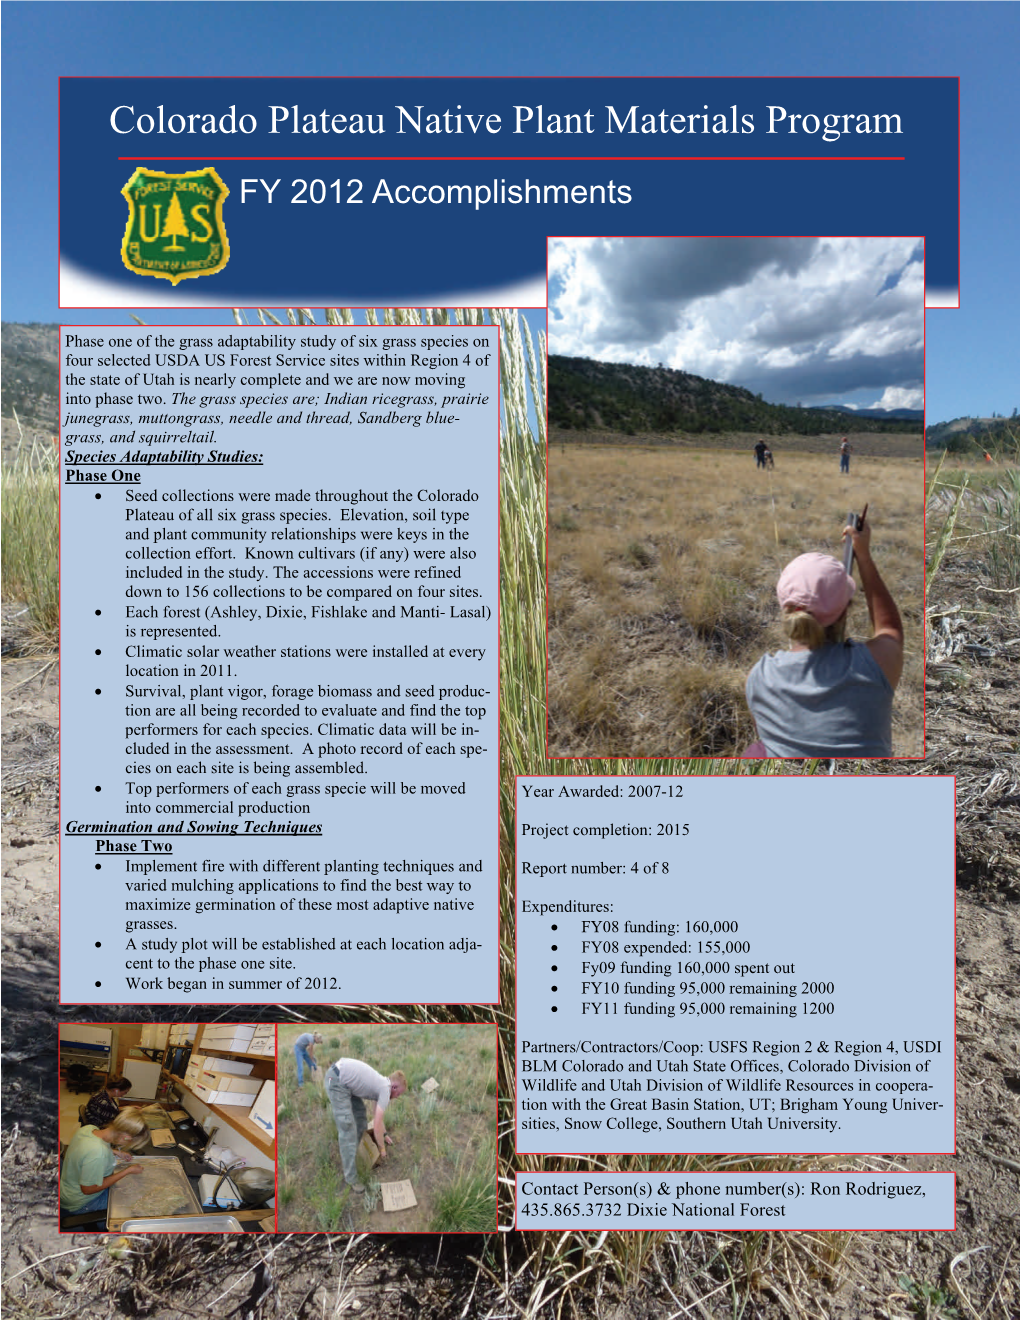 Colorado Plateau Native Plant Materials Program FY 2012